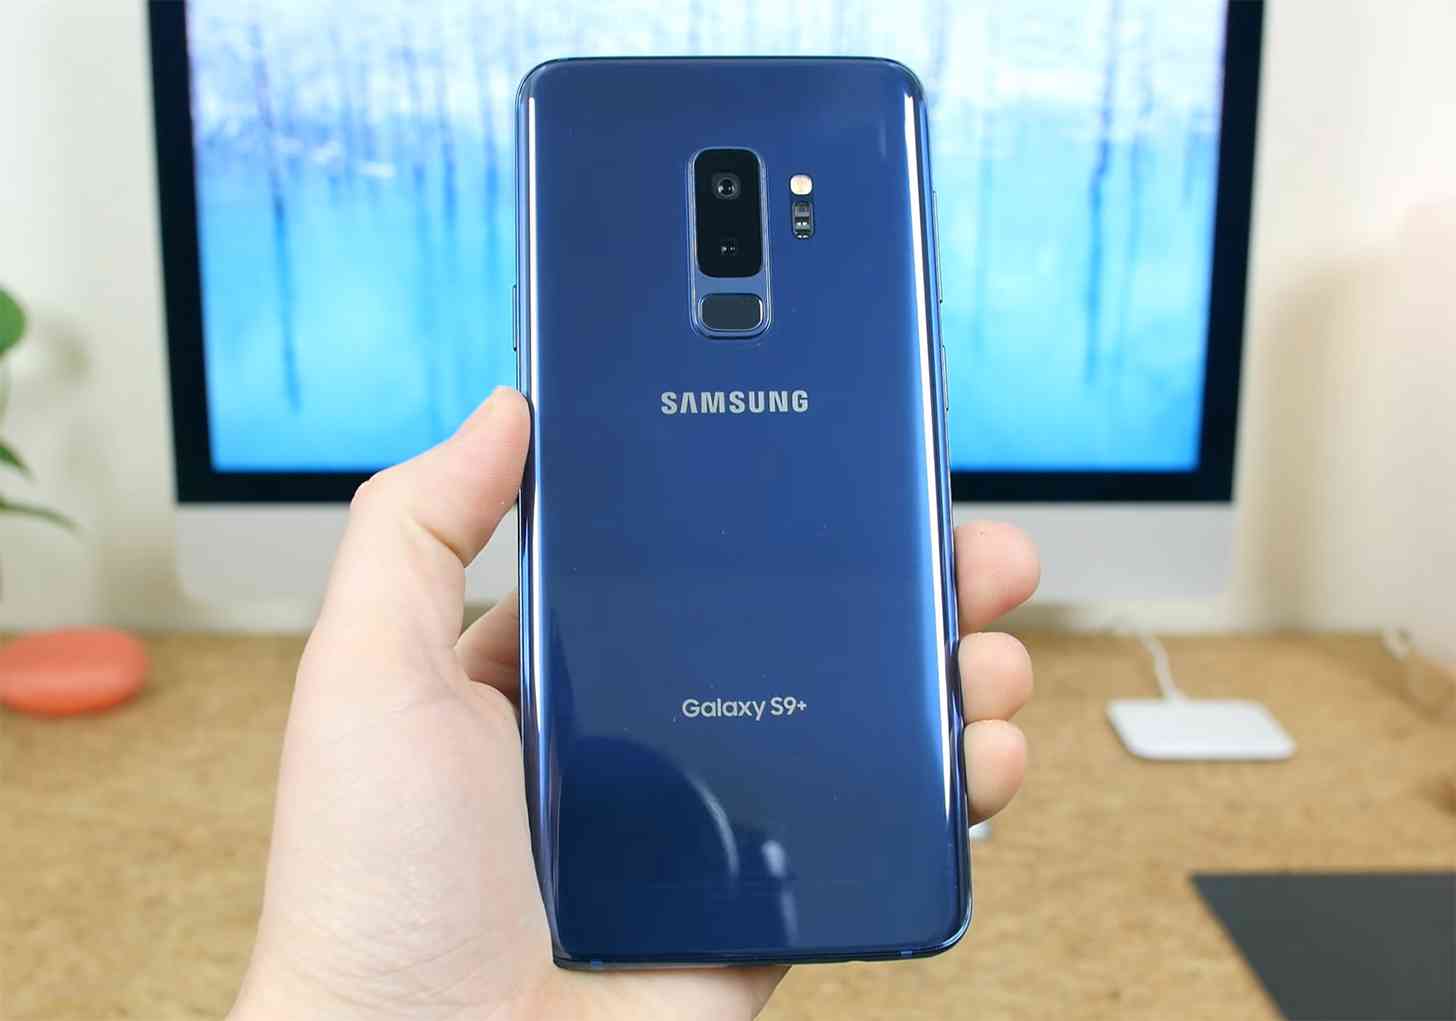 Samsung Galaxy S9+ hands-on